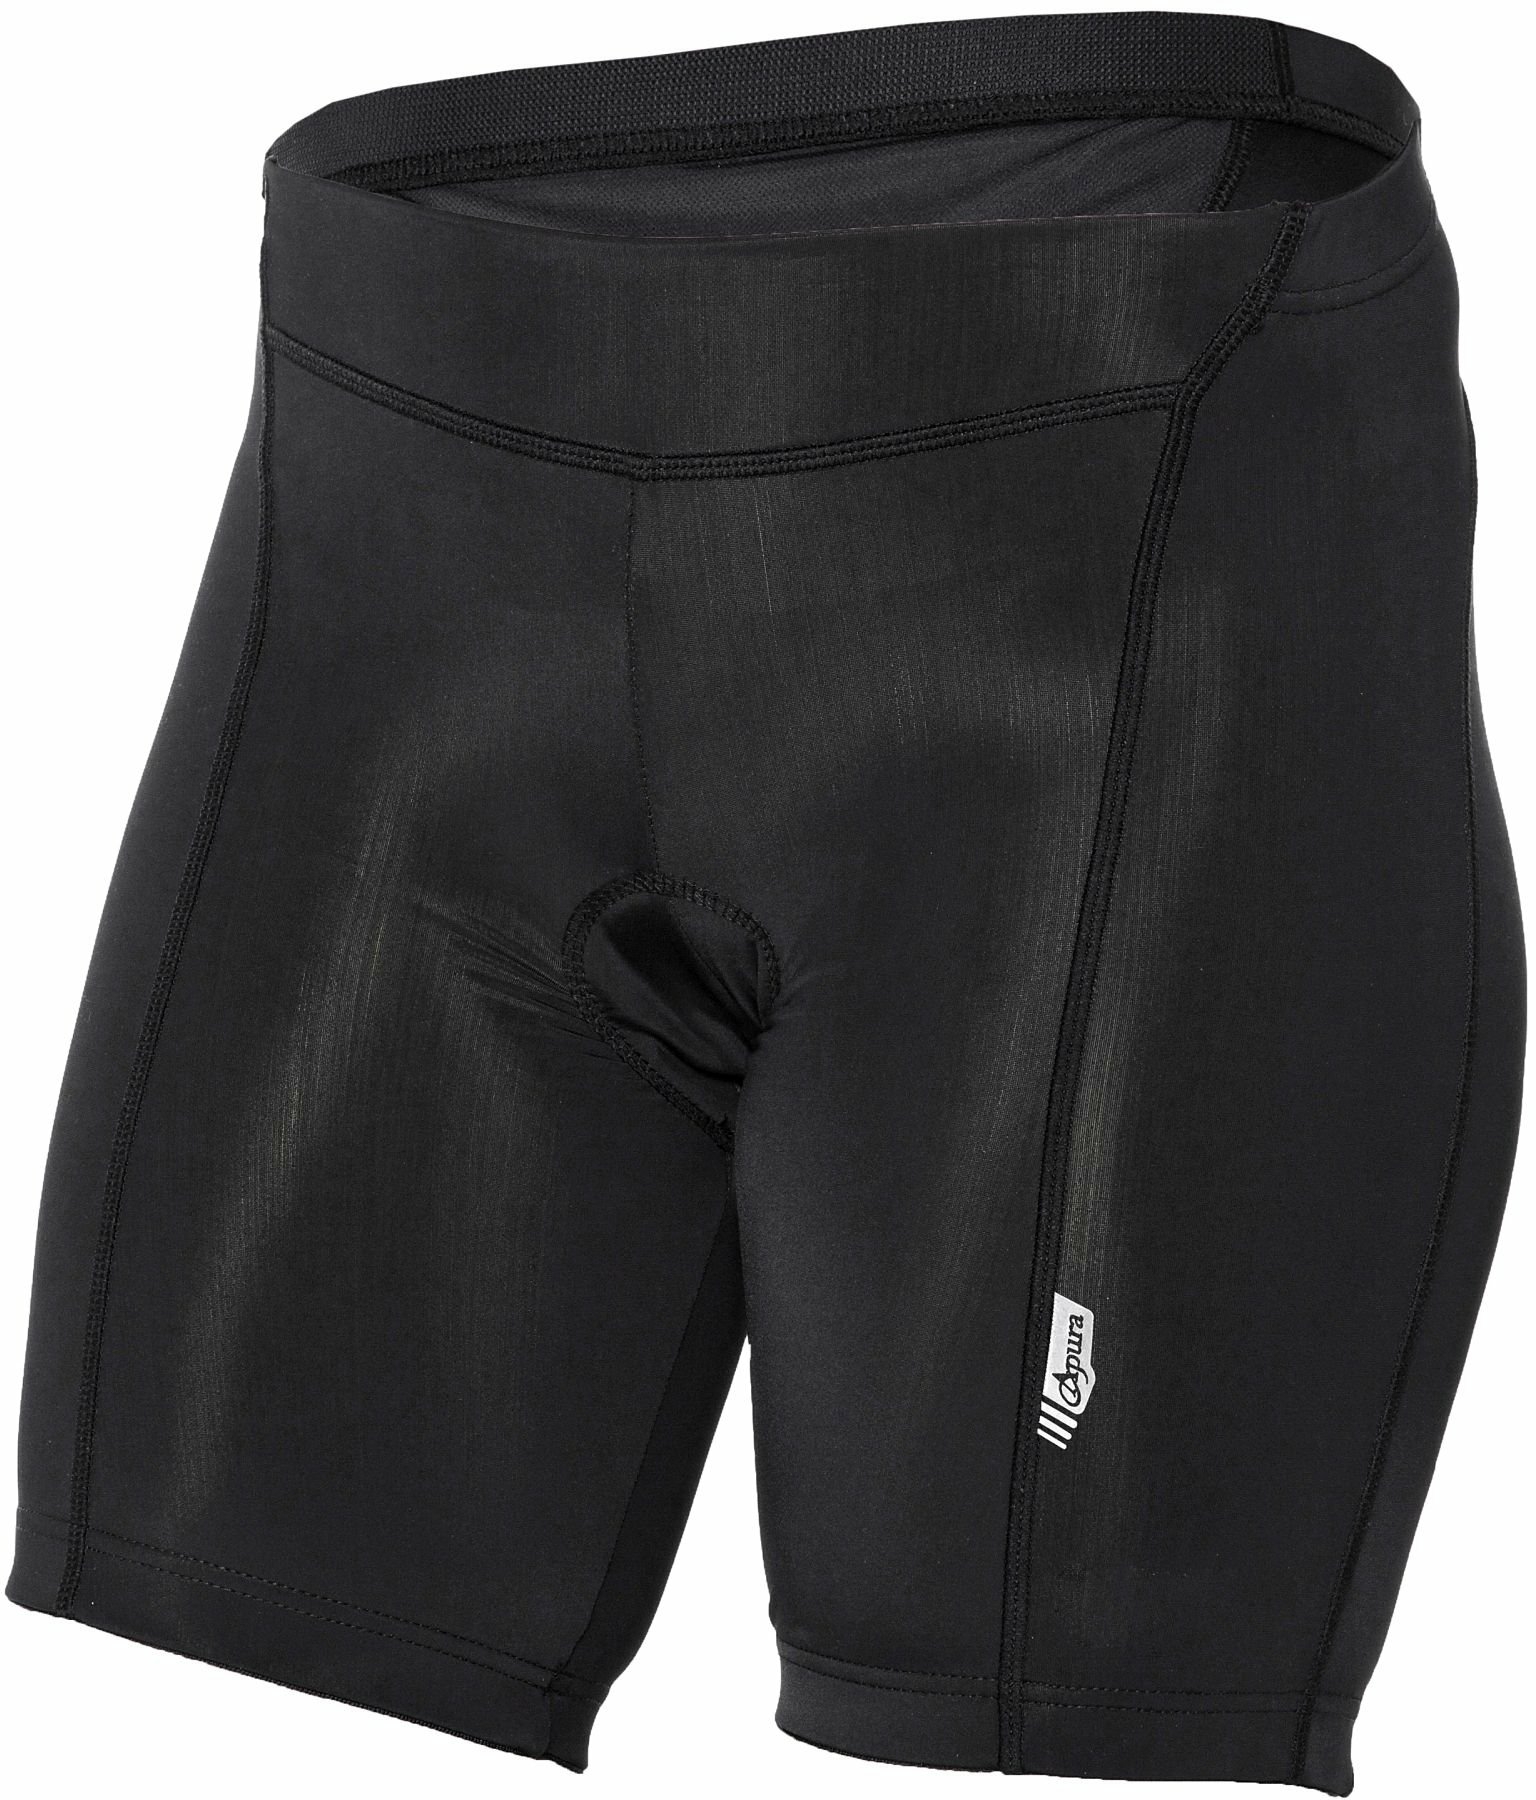 Bekleidung/Hosen: Apura  Damen Shorts Basic Shorts 2.0 XXL 